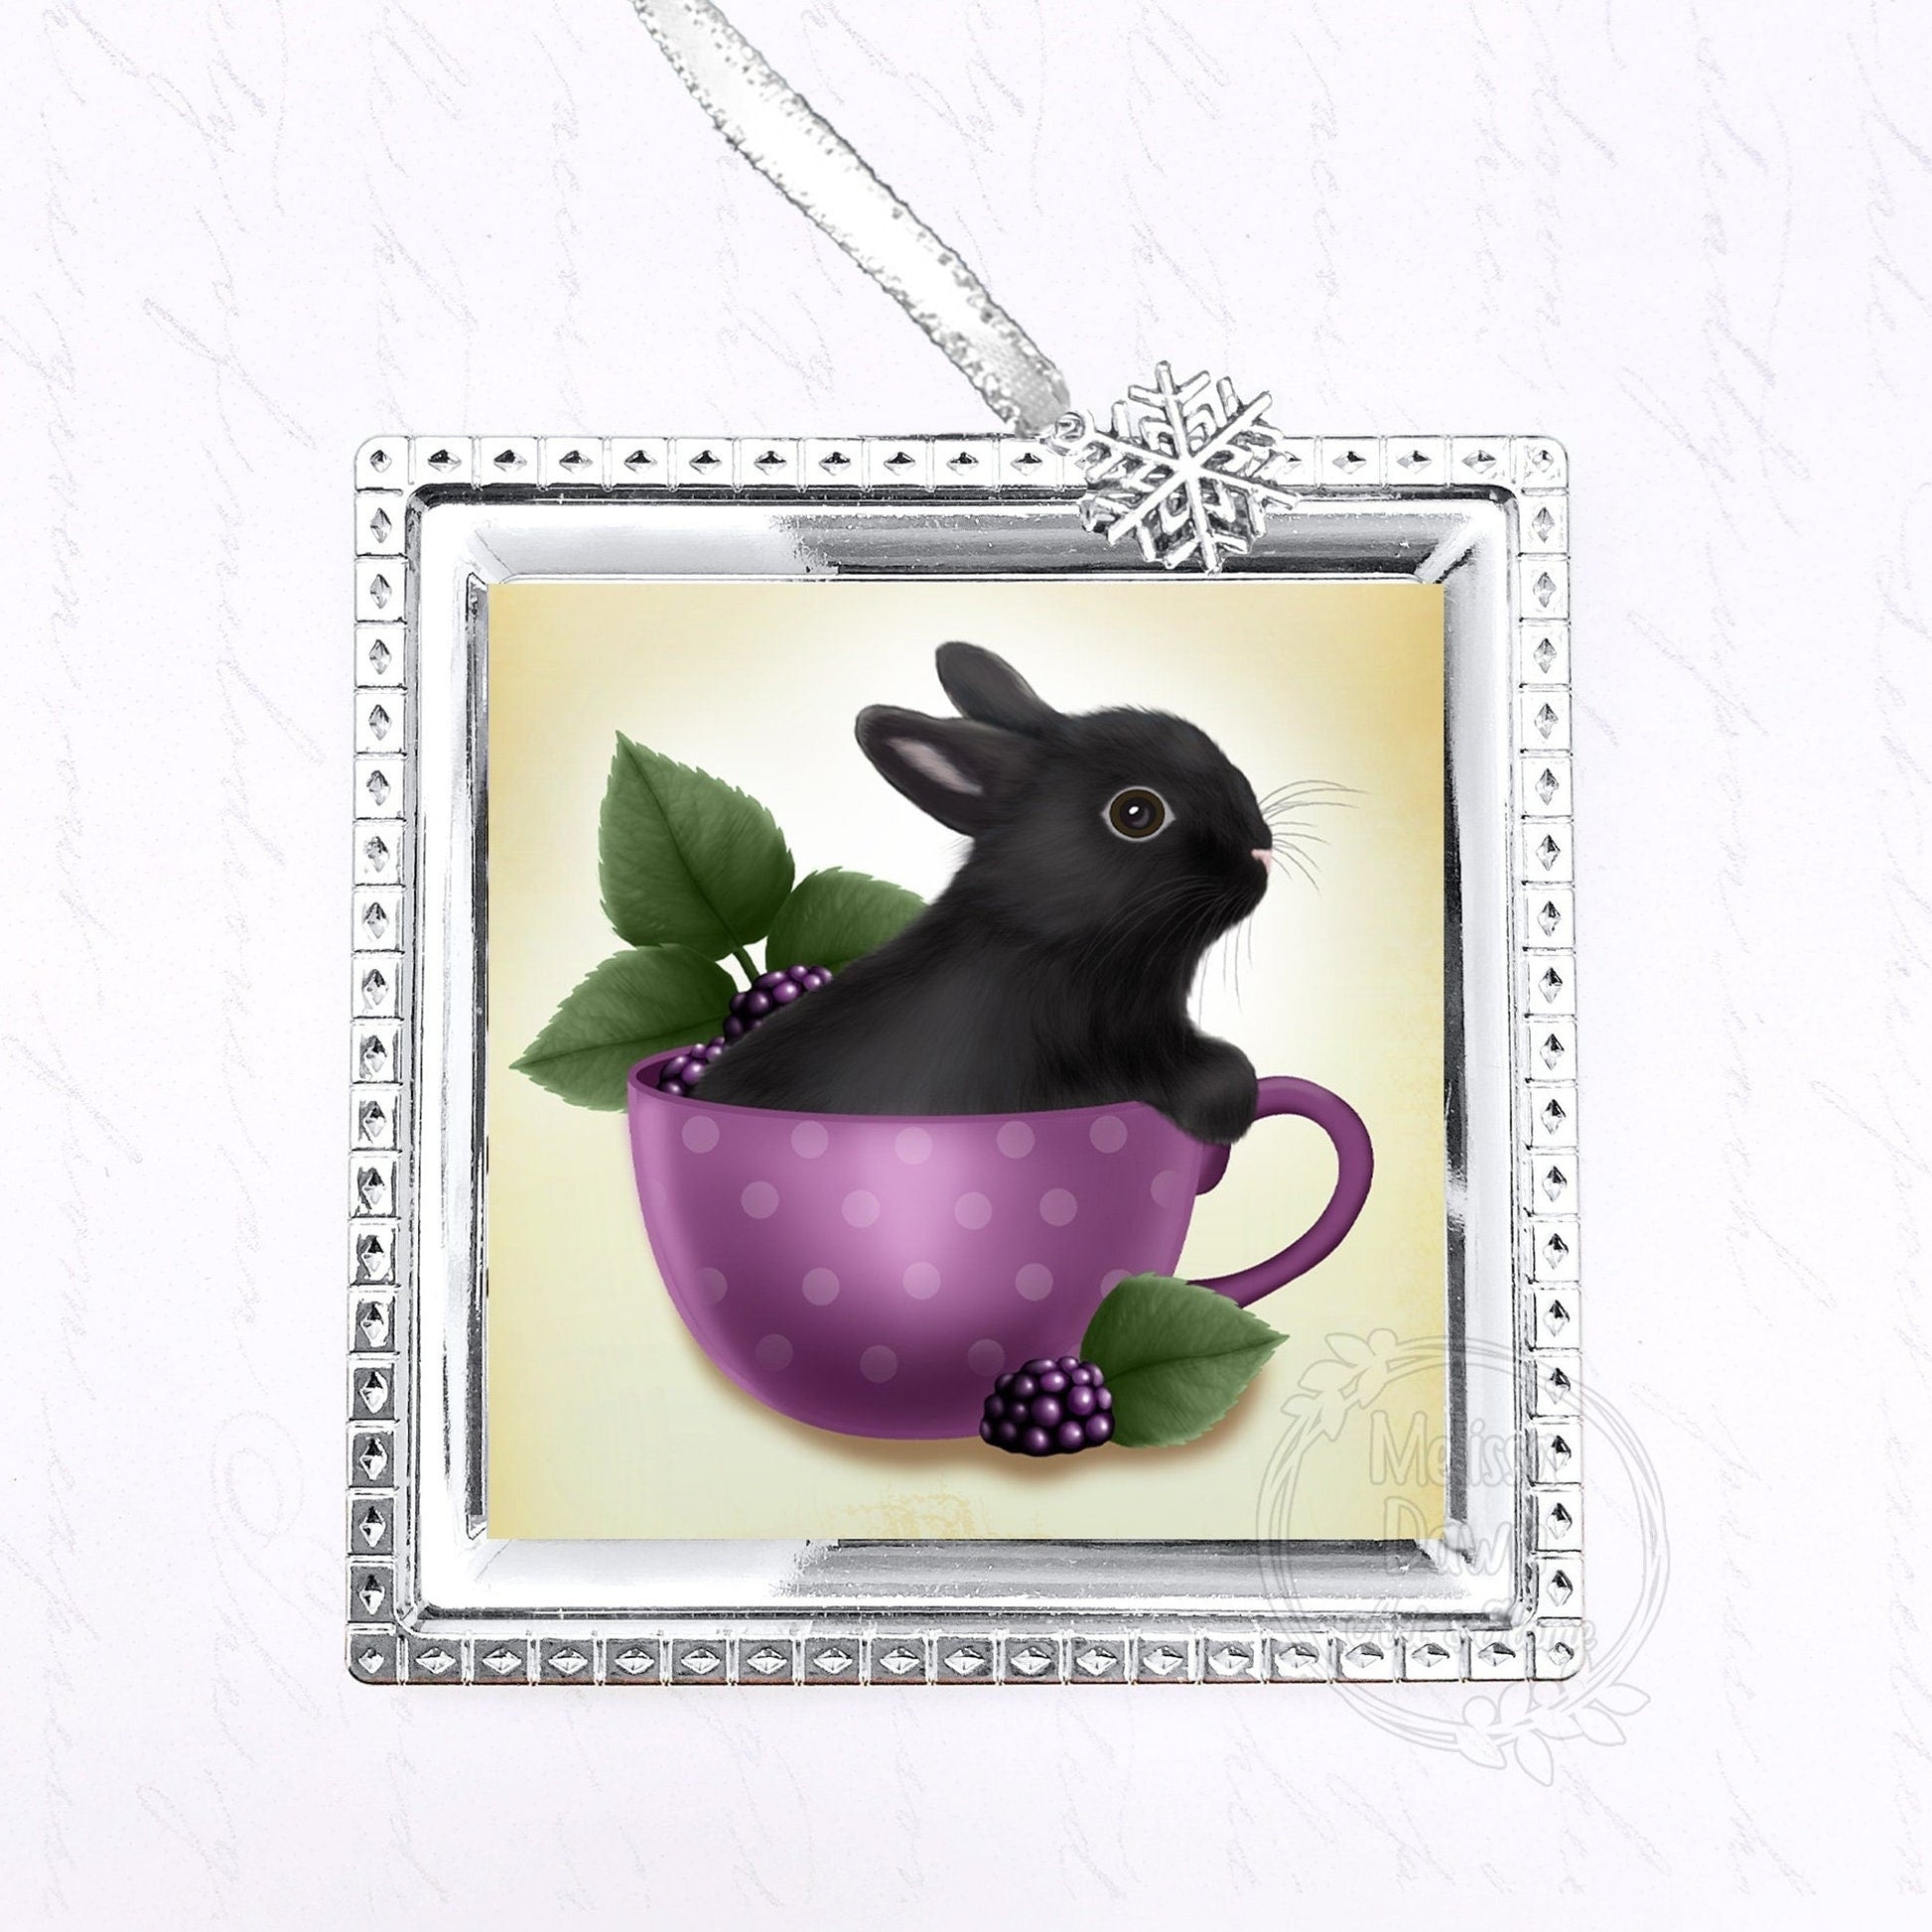 Black Bunny Ornament / Rabbit Ornament / Custom Bunny Ornament / Black Rabbit Ornament / Personalized Bunny Ornament / Blackberry Tea Bunny